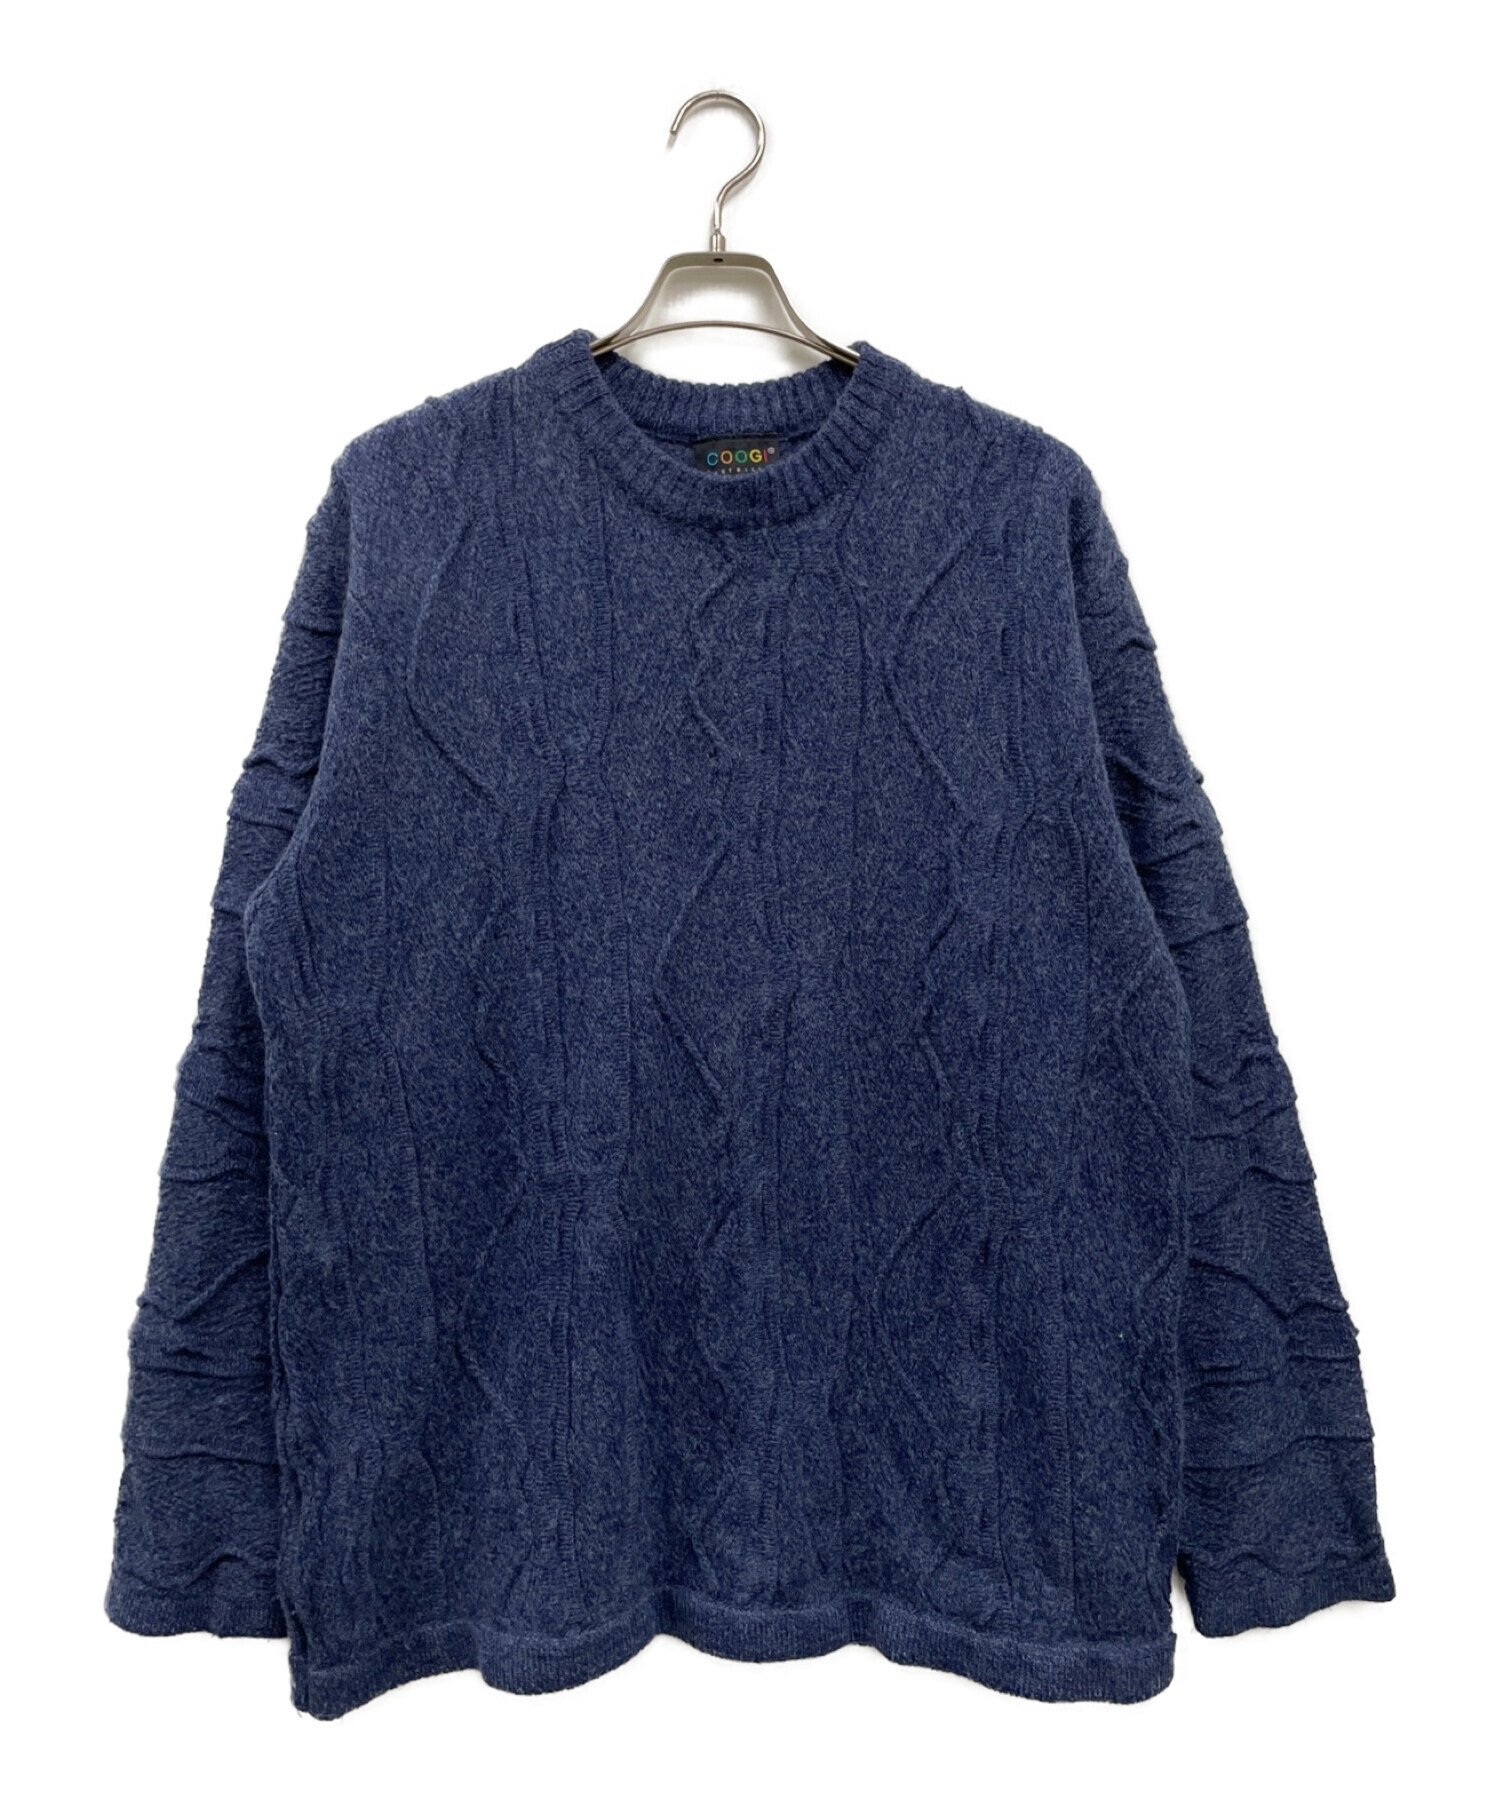 COOGI navy sweater クージー ネイビー セーターニット/セーター